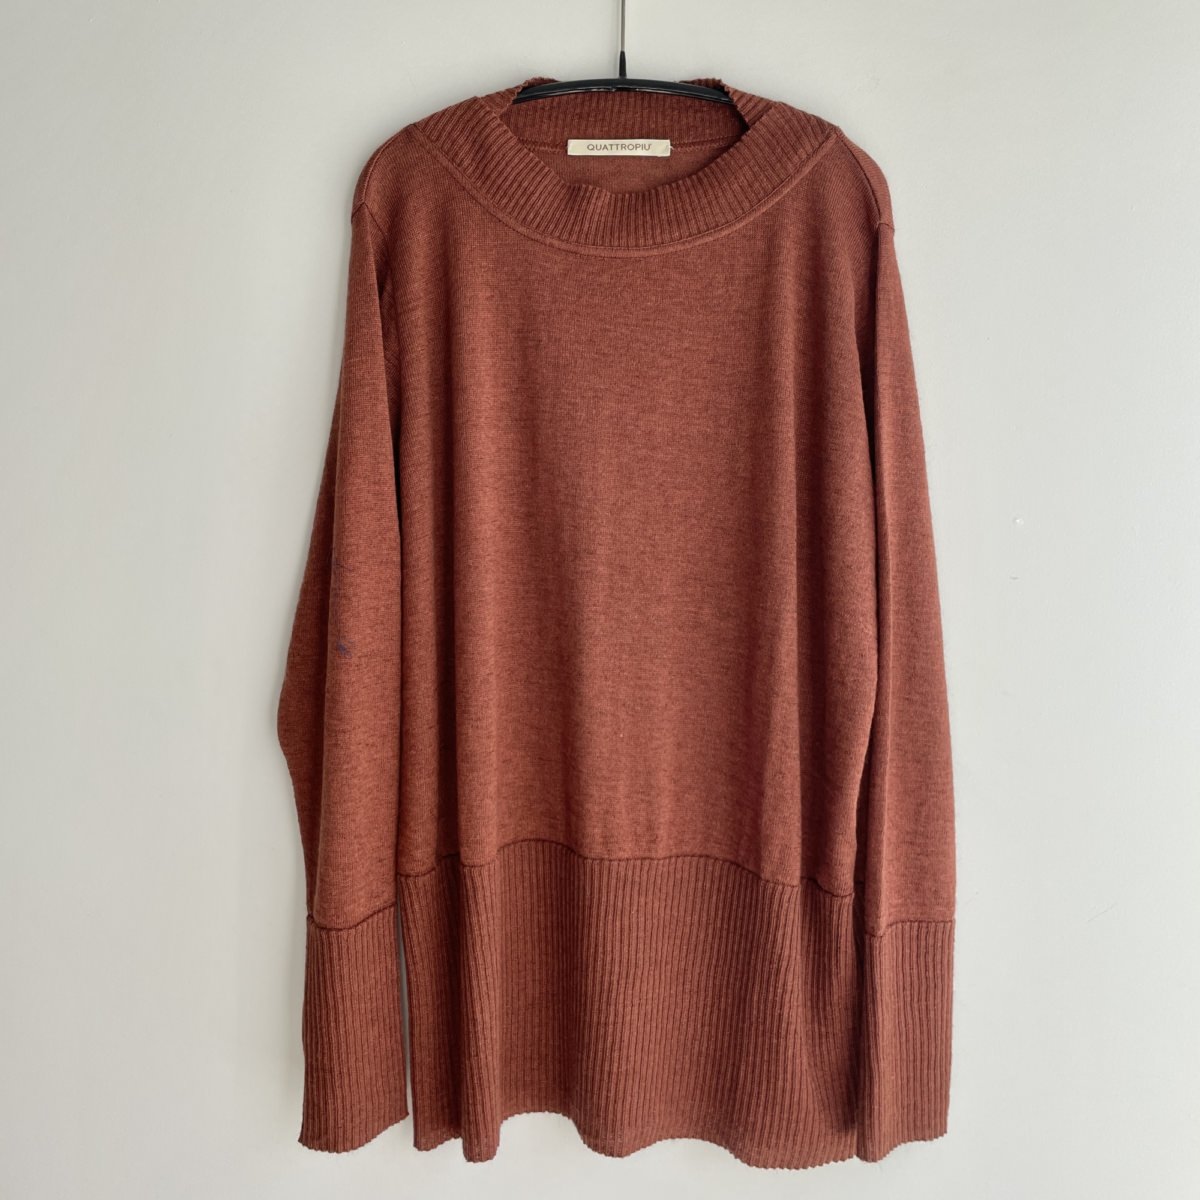 QUATTROPIUOthers ASTRID / Sweater